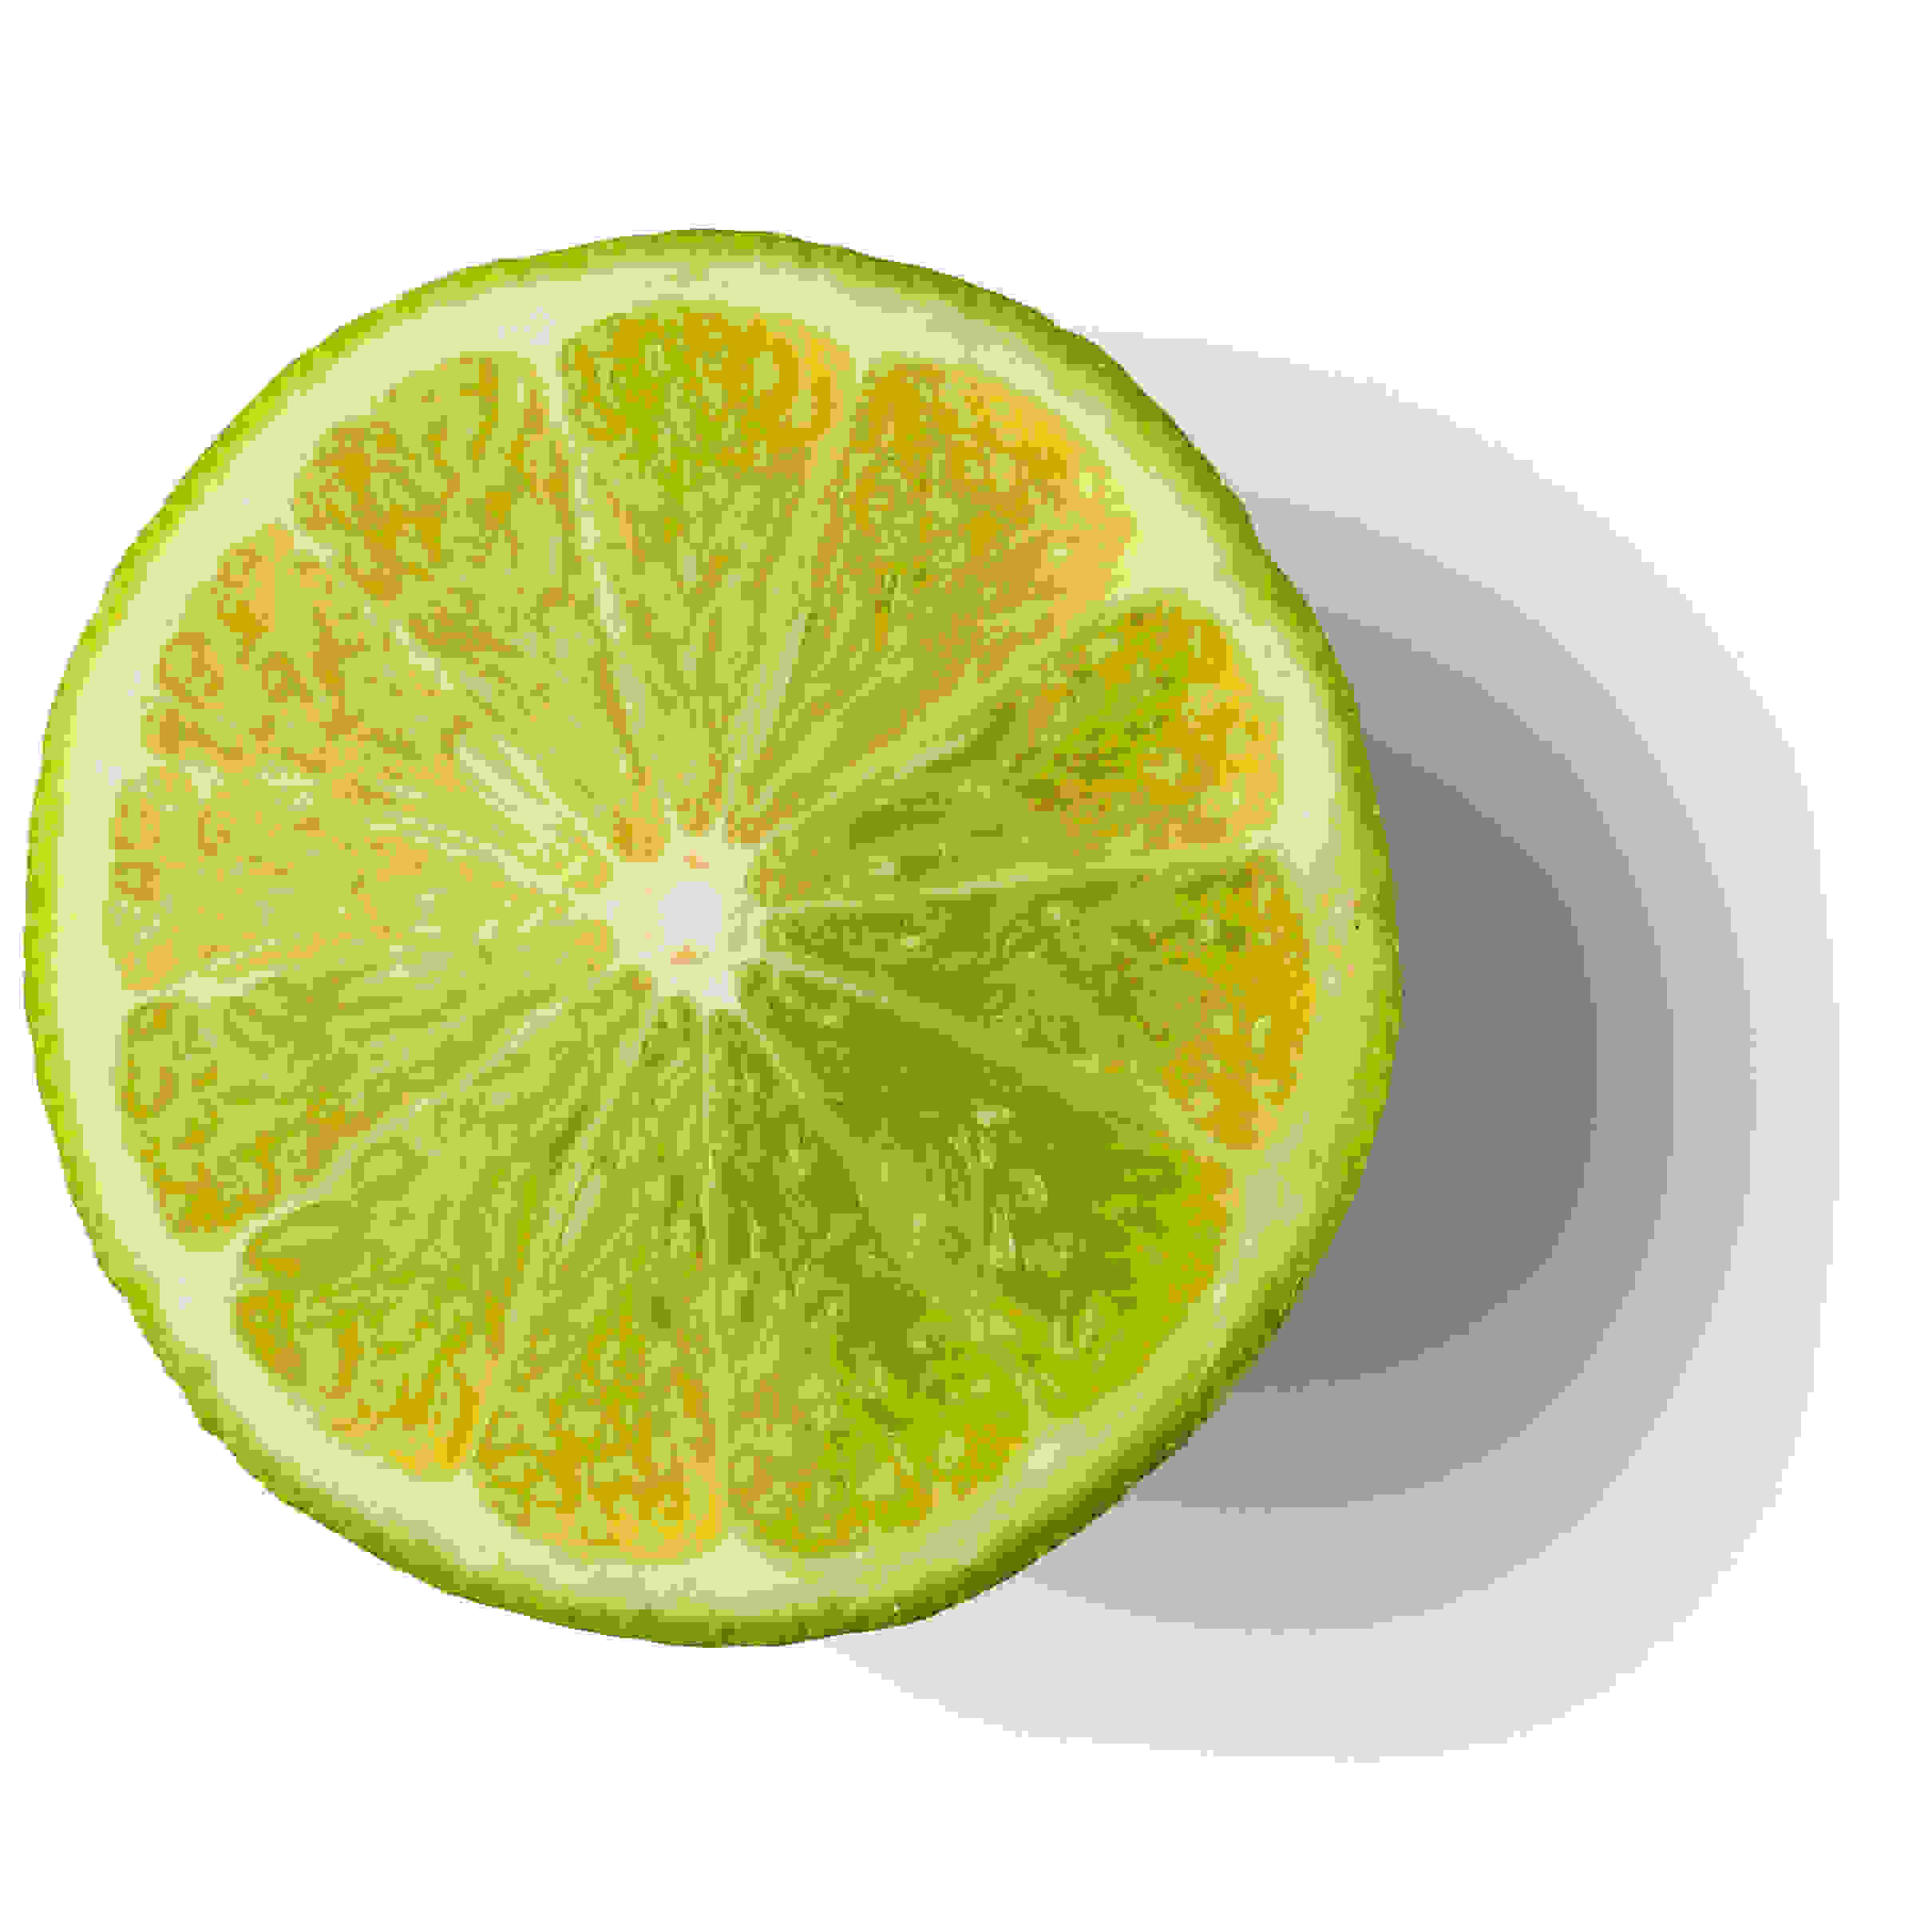 Fresh Lime Extracted in Vodka (Citrus aurantifolia)